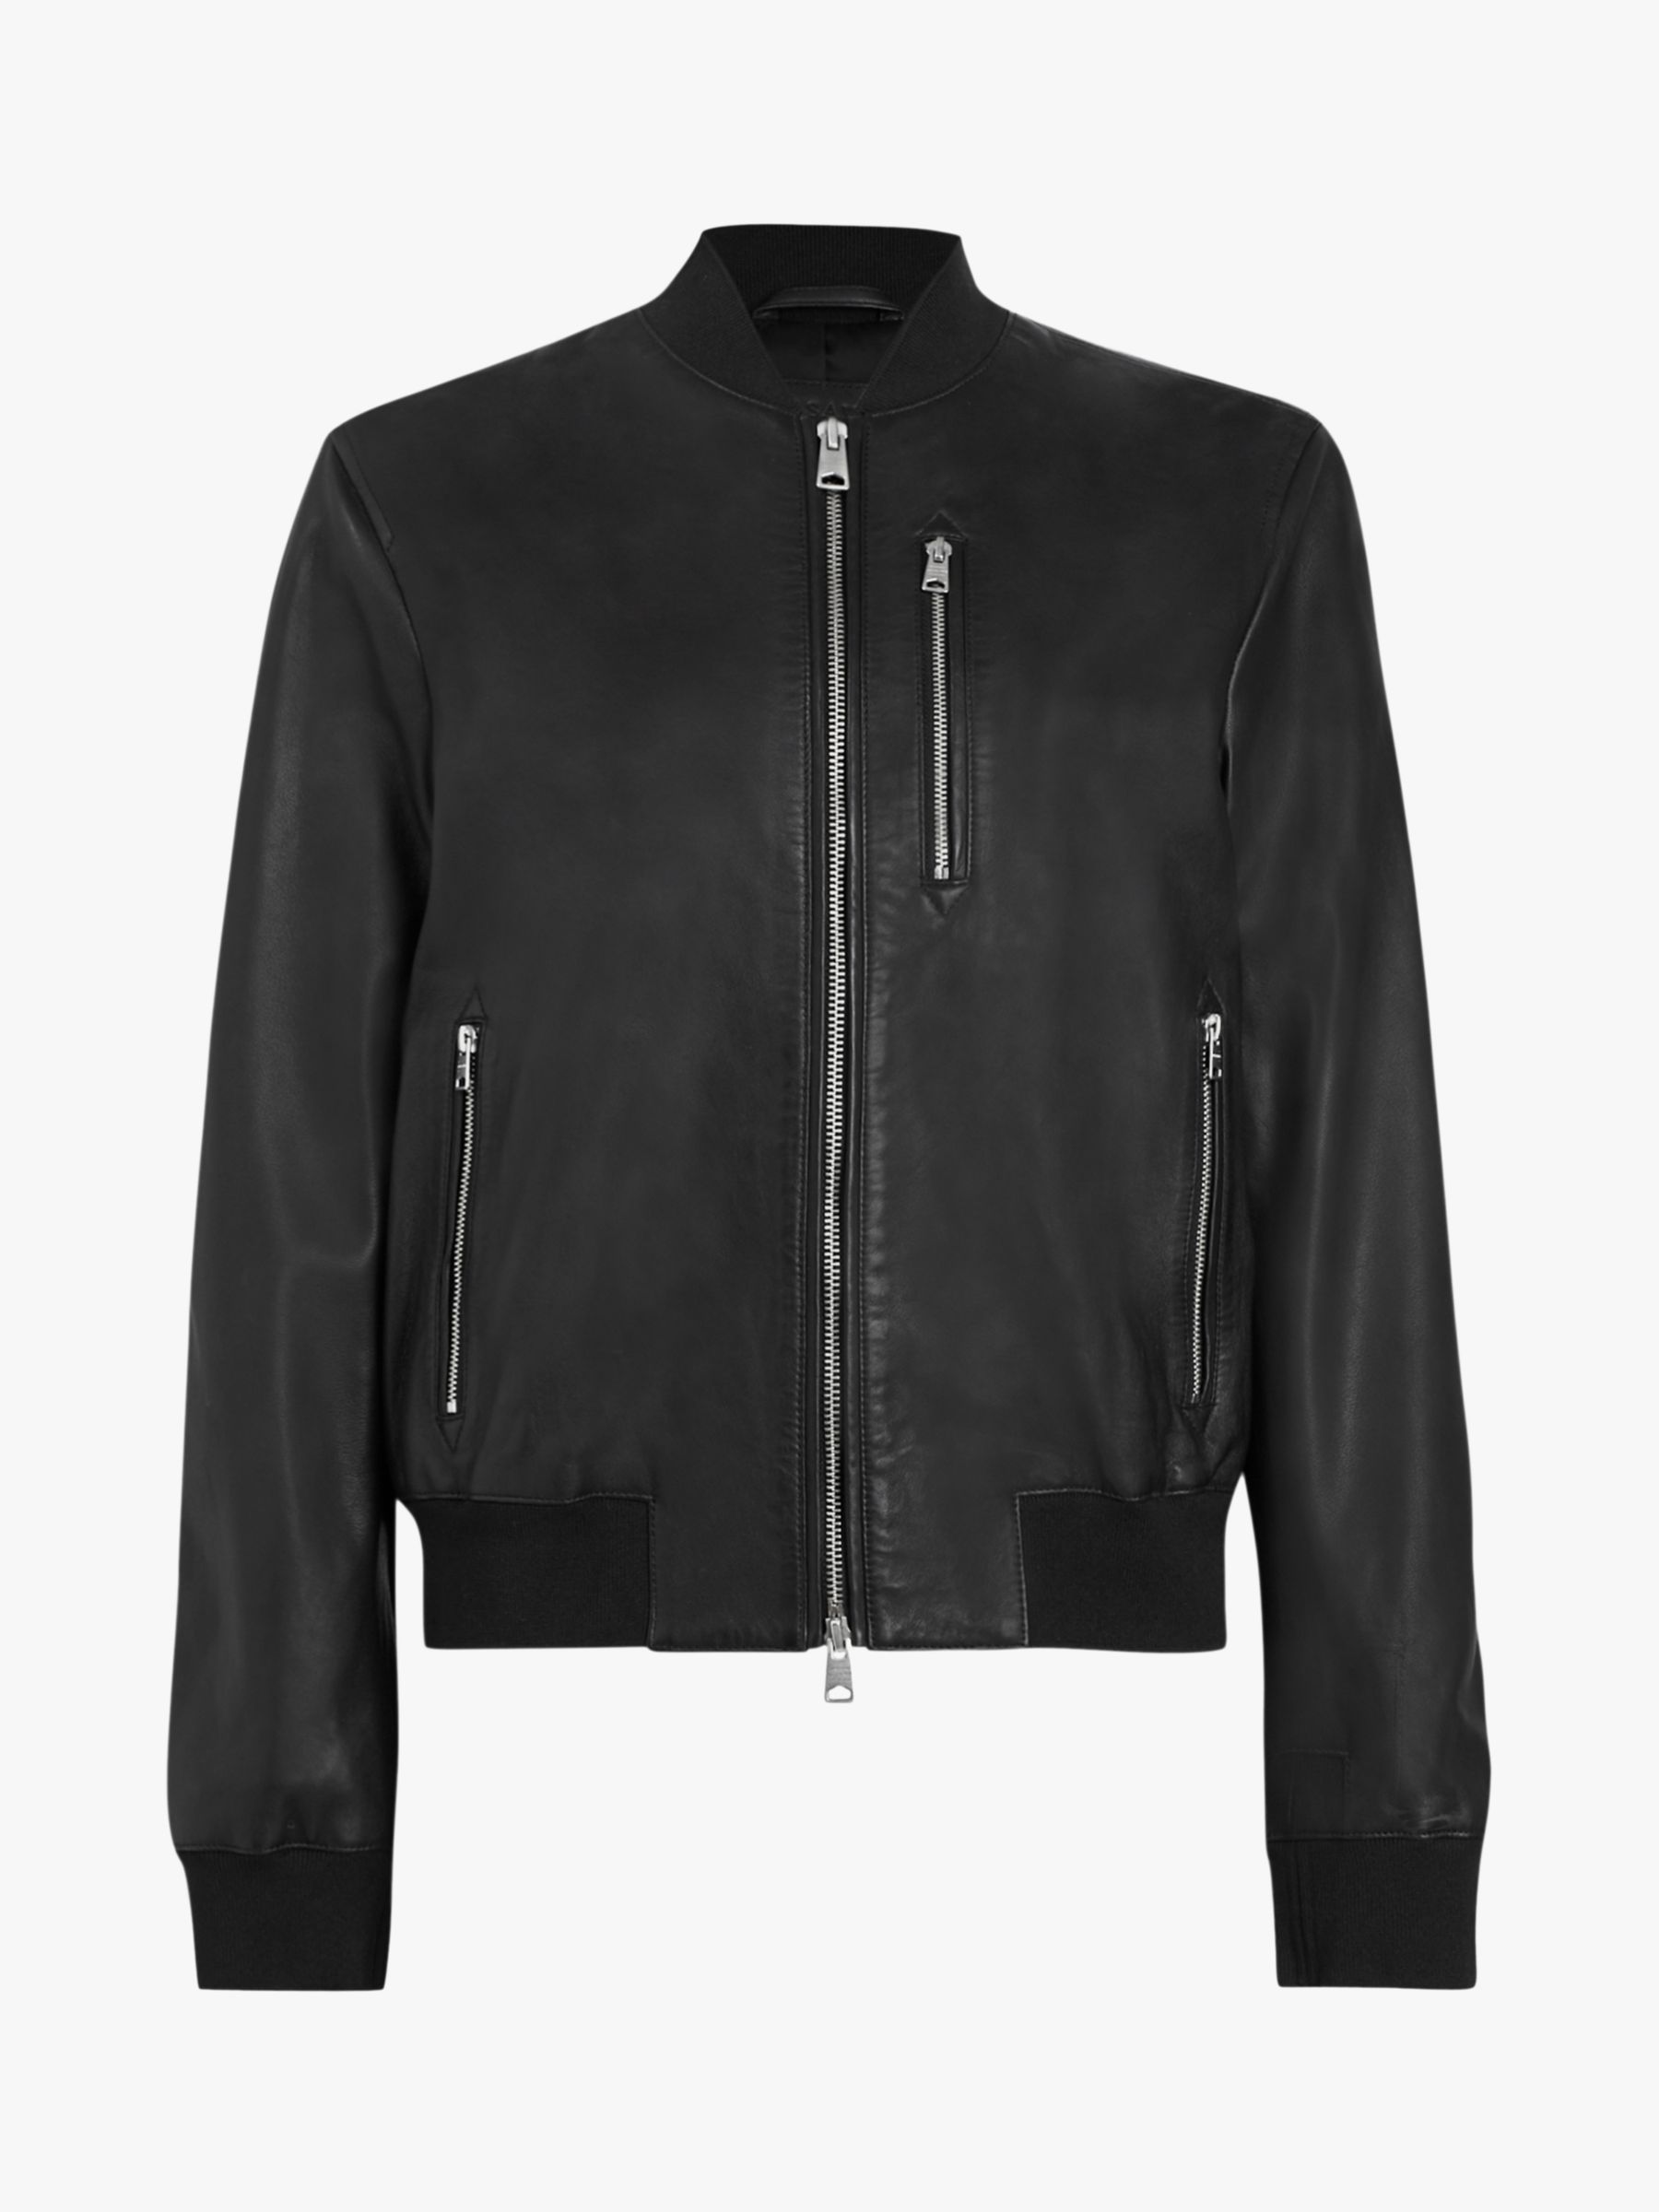 AllSaints Remy Leather Bomber Jacket, Black at John Lewis & Partners